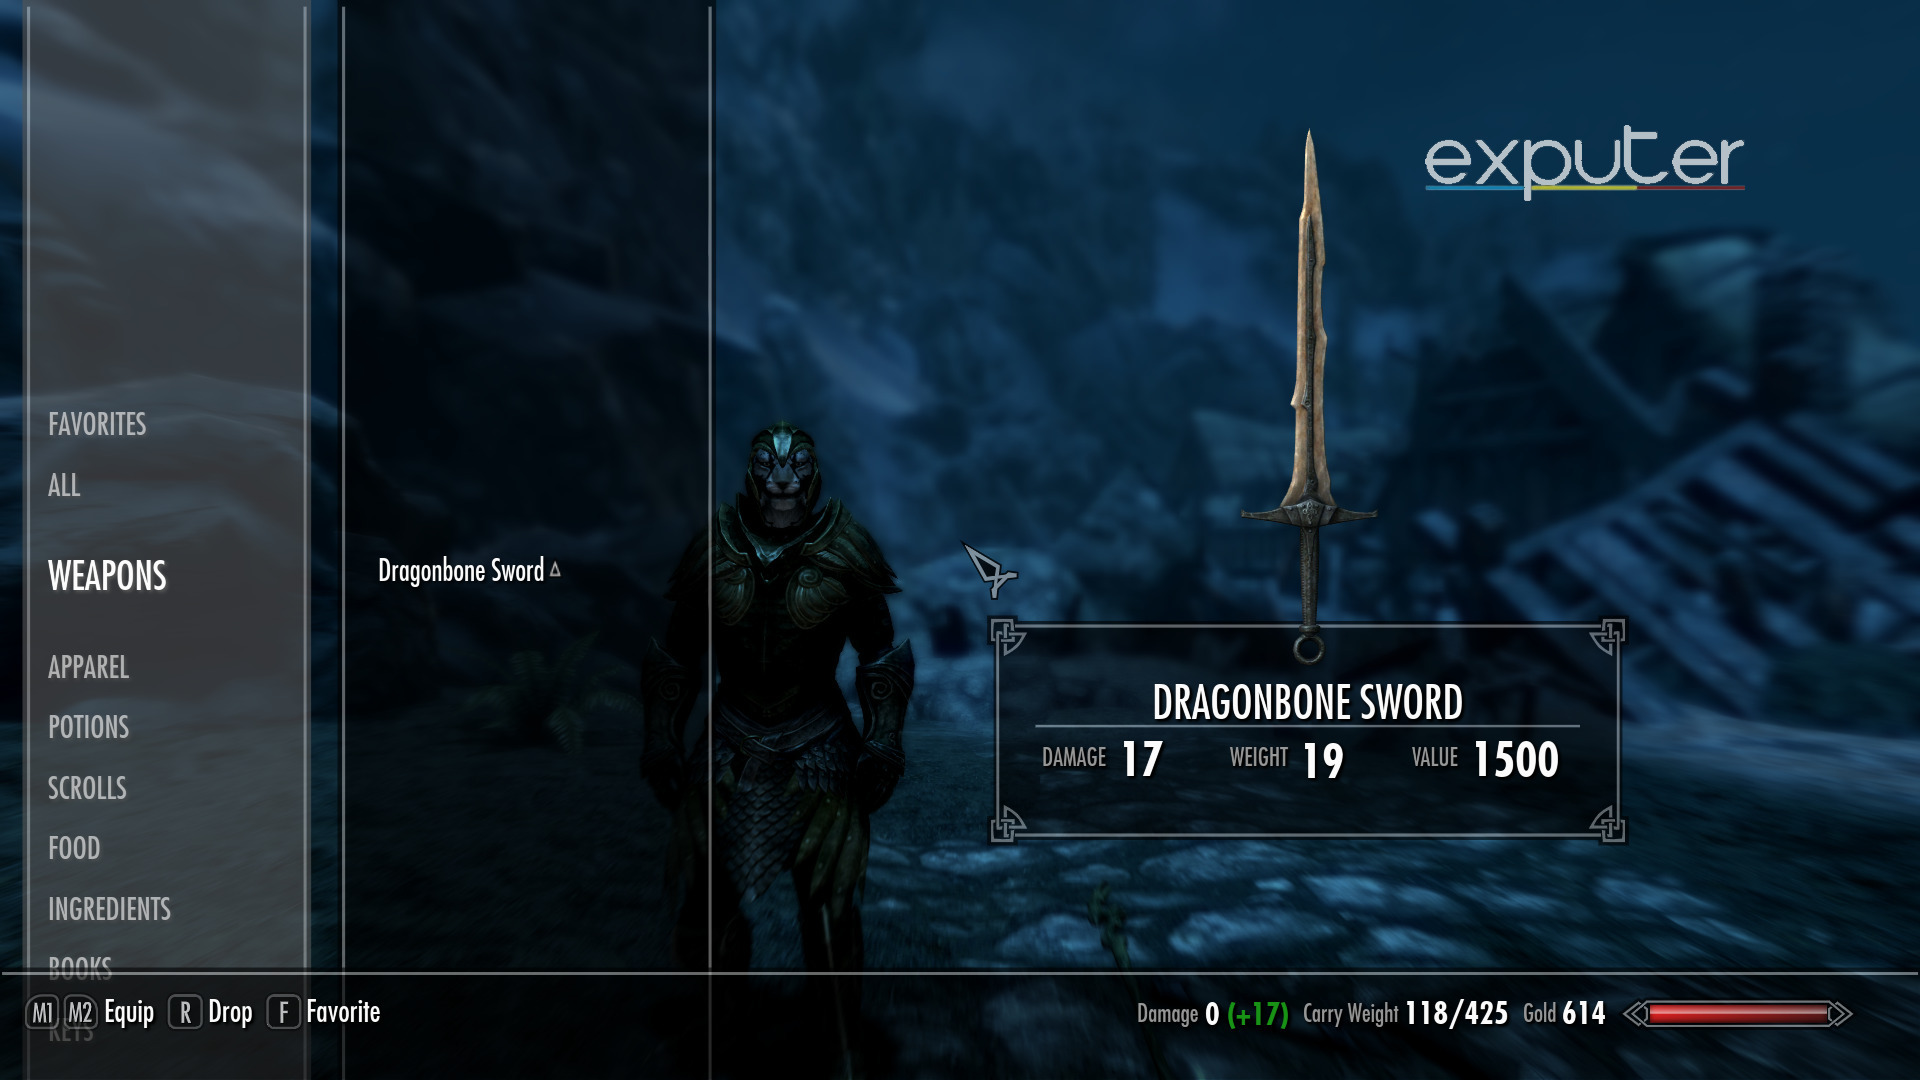 The Dragonbane Sword.